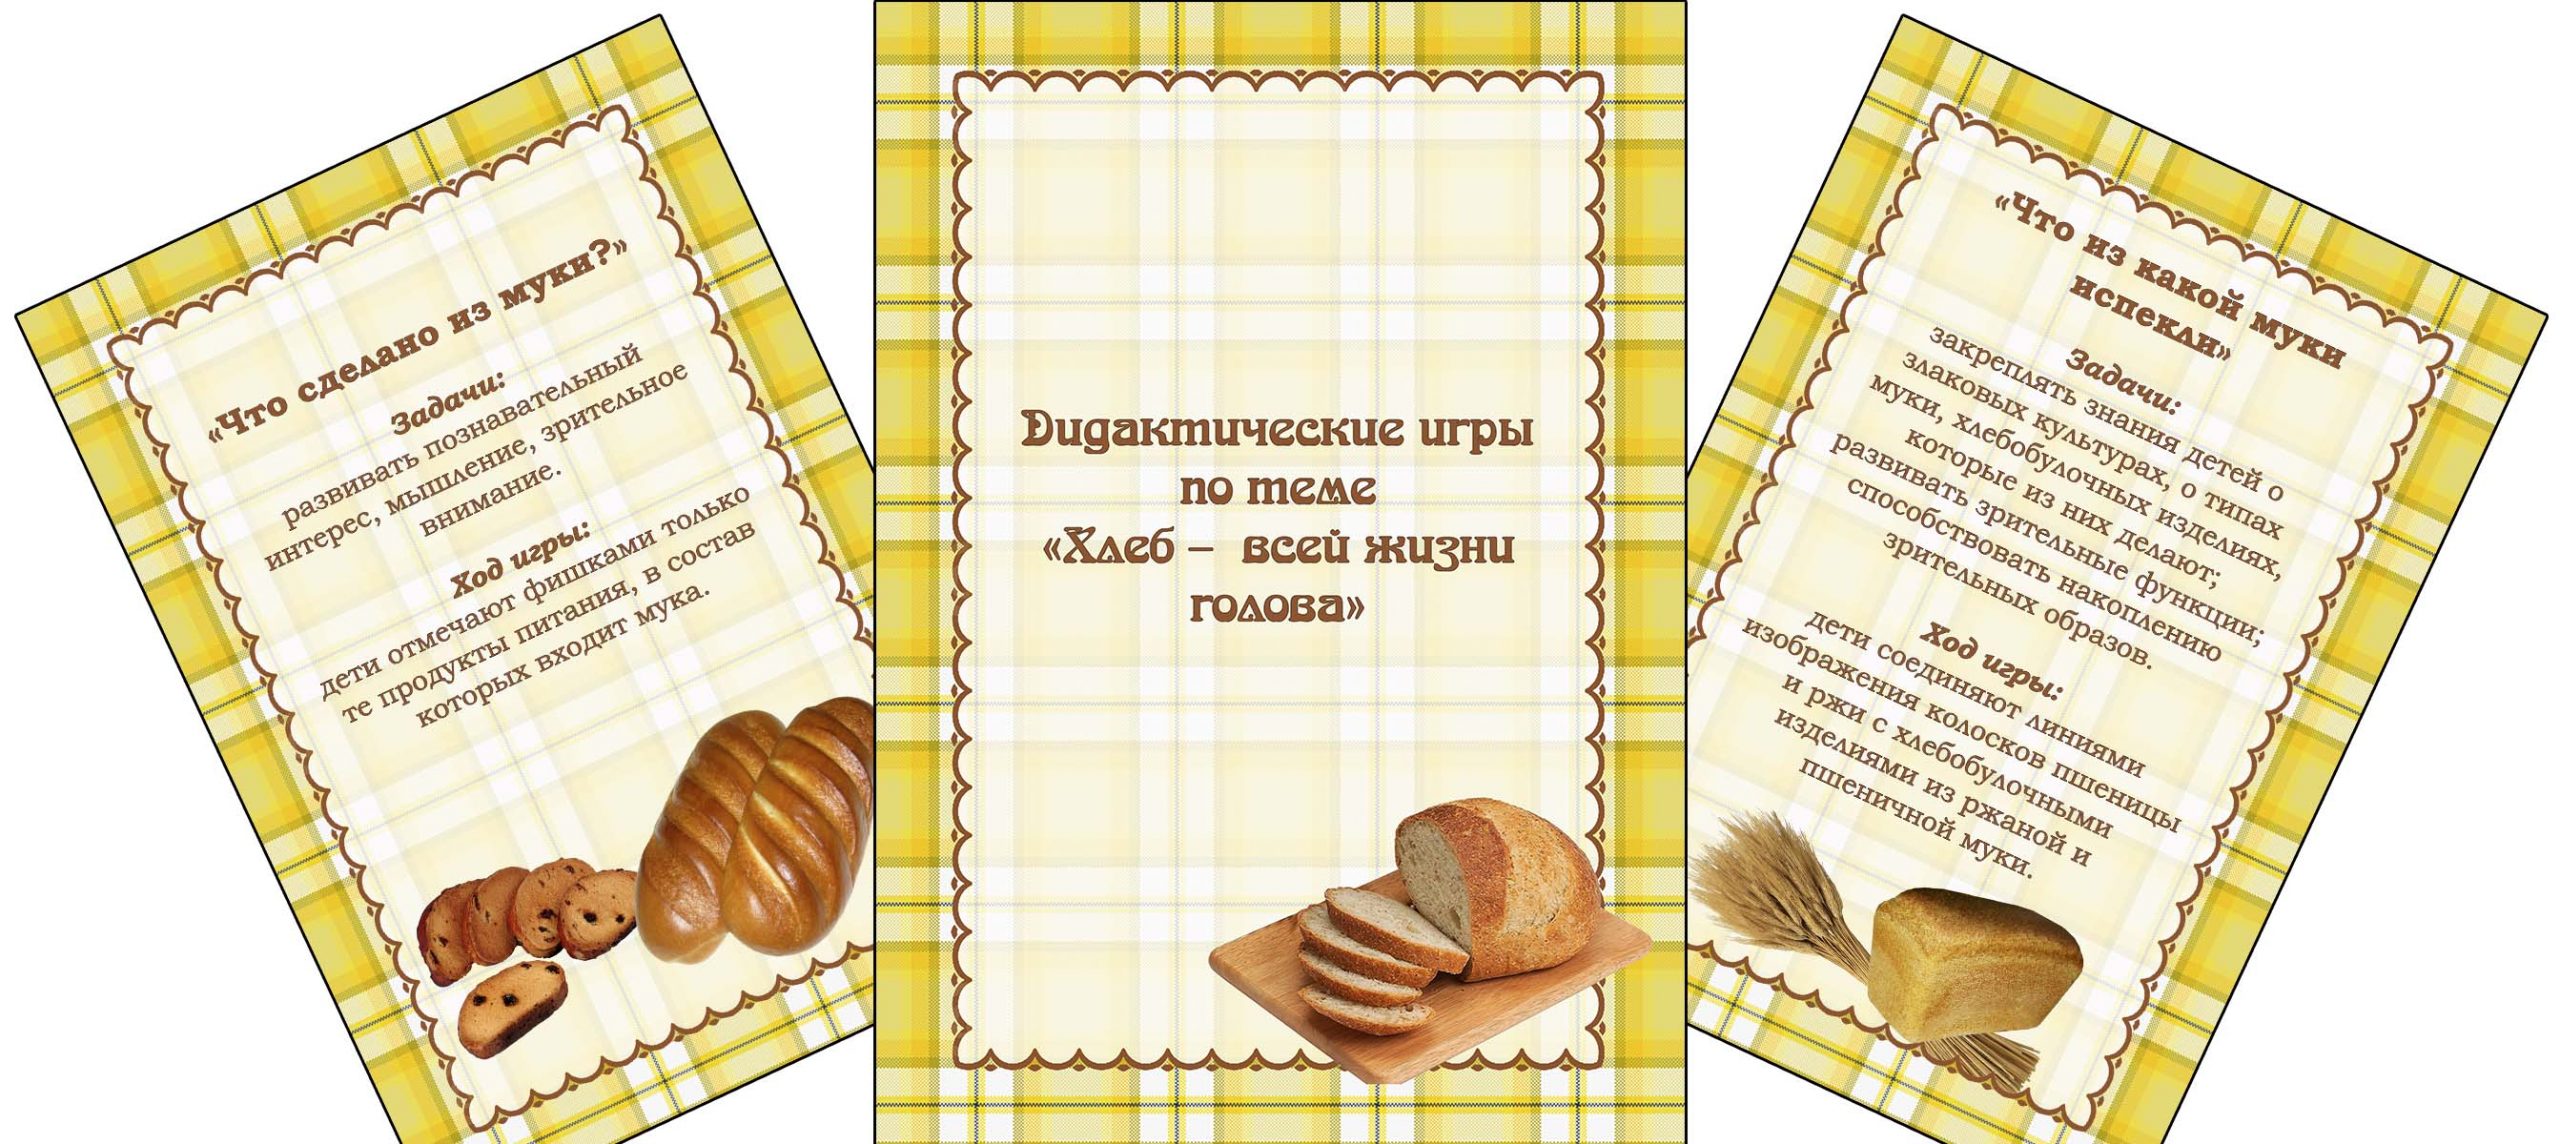 5dd0d3f218f36 scaled - Пословицы и загадки о хлебе